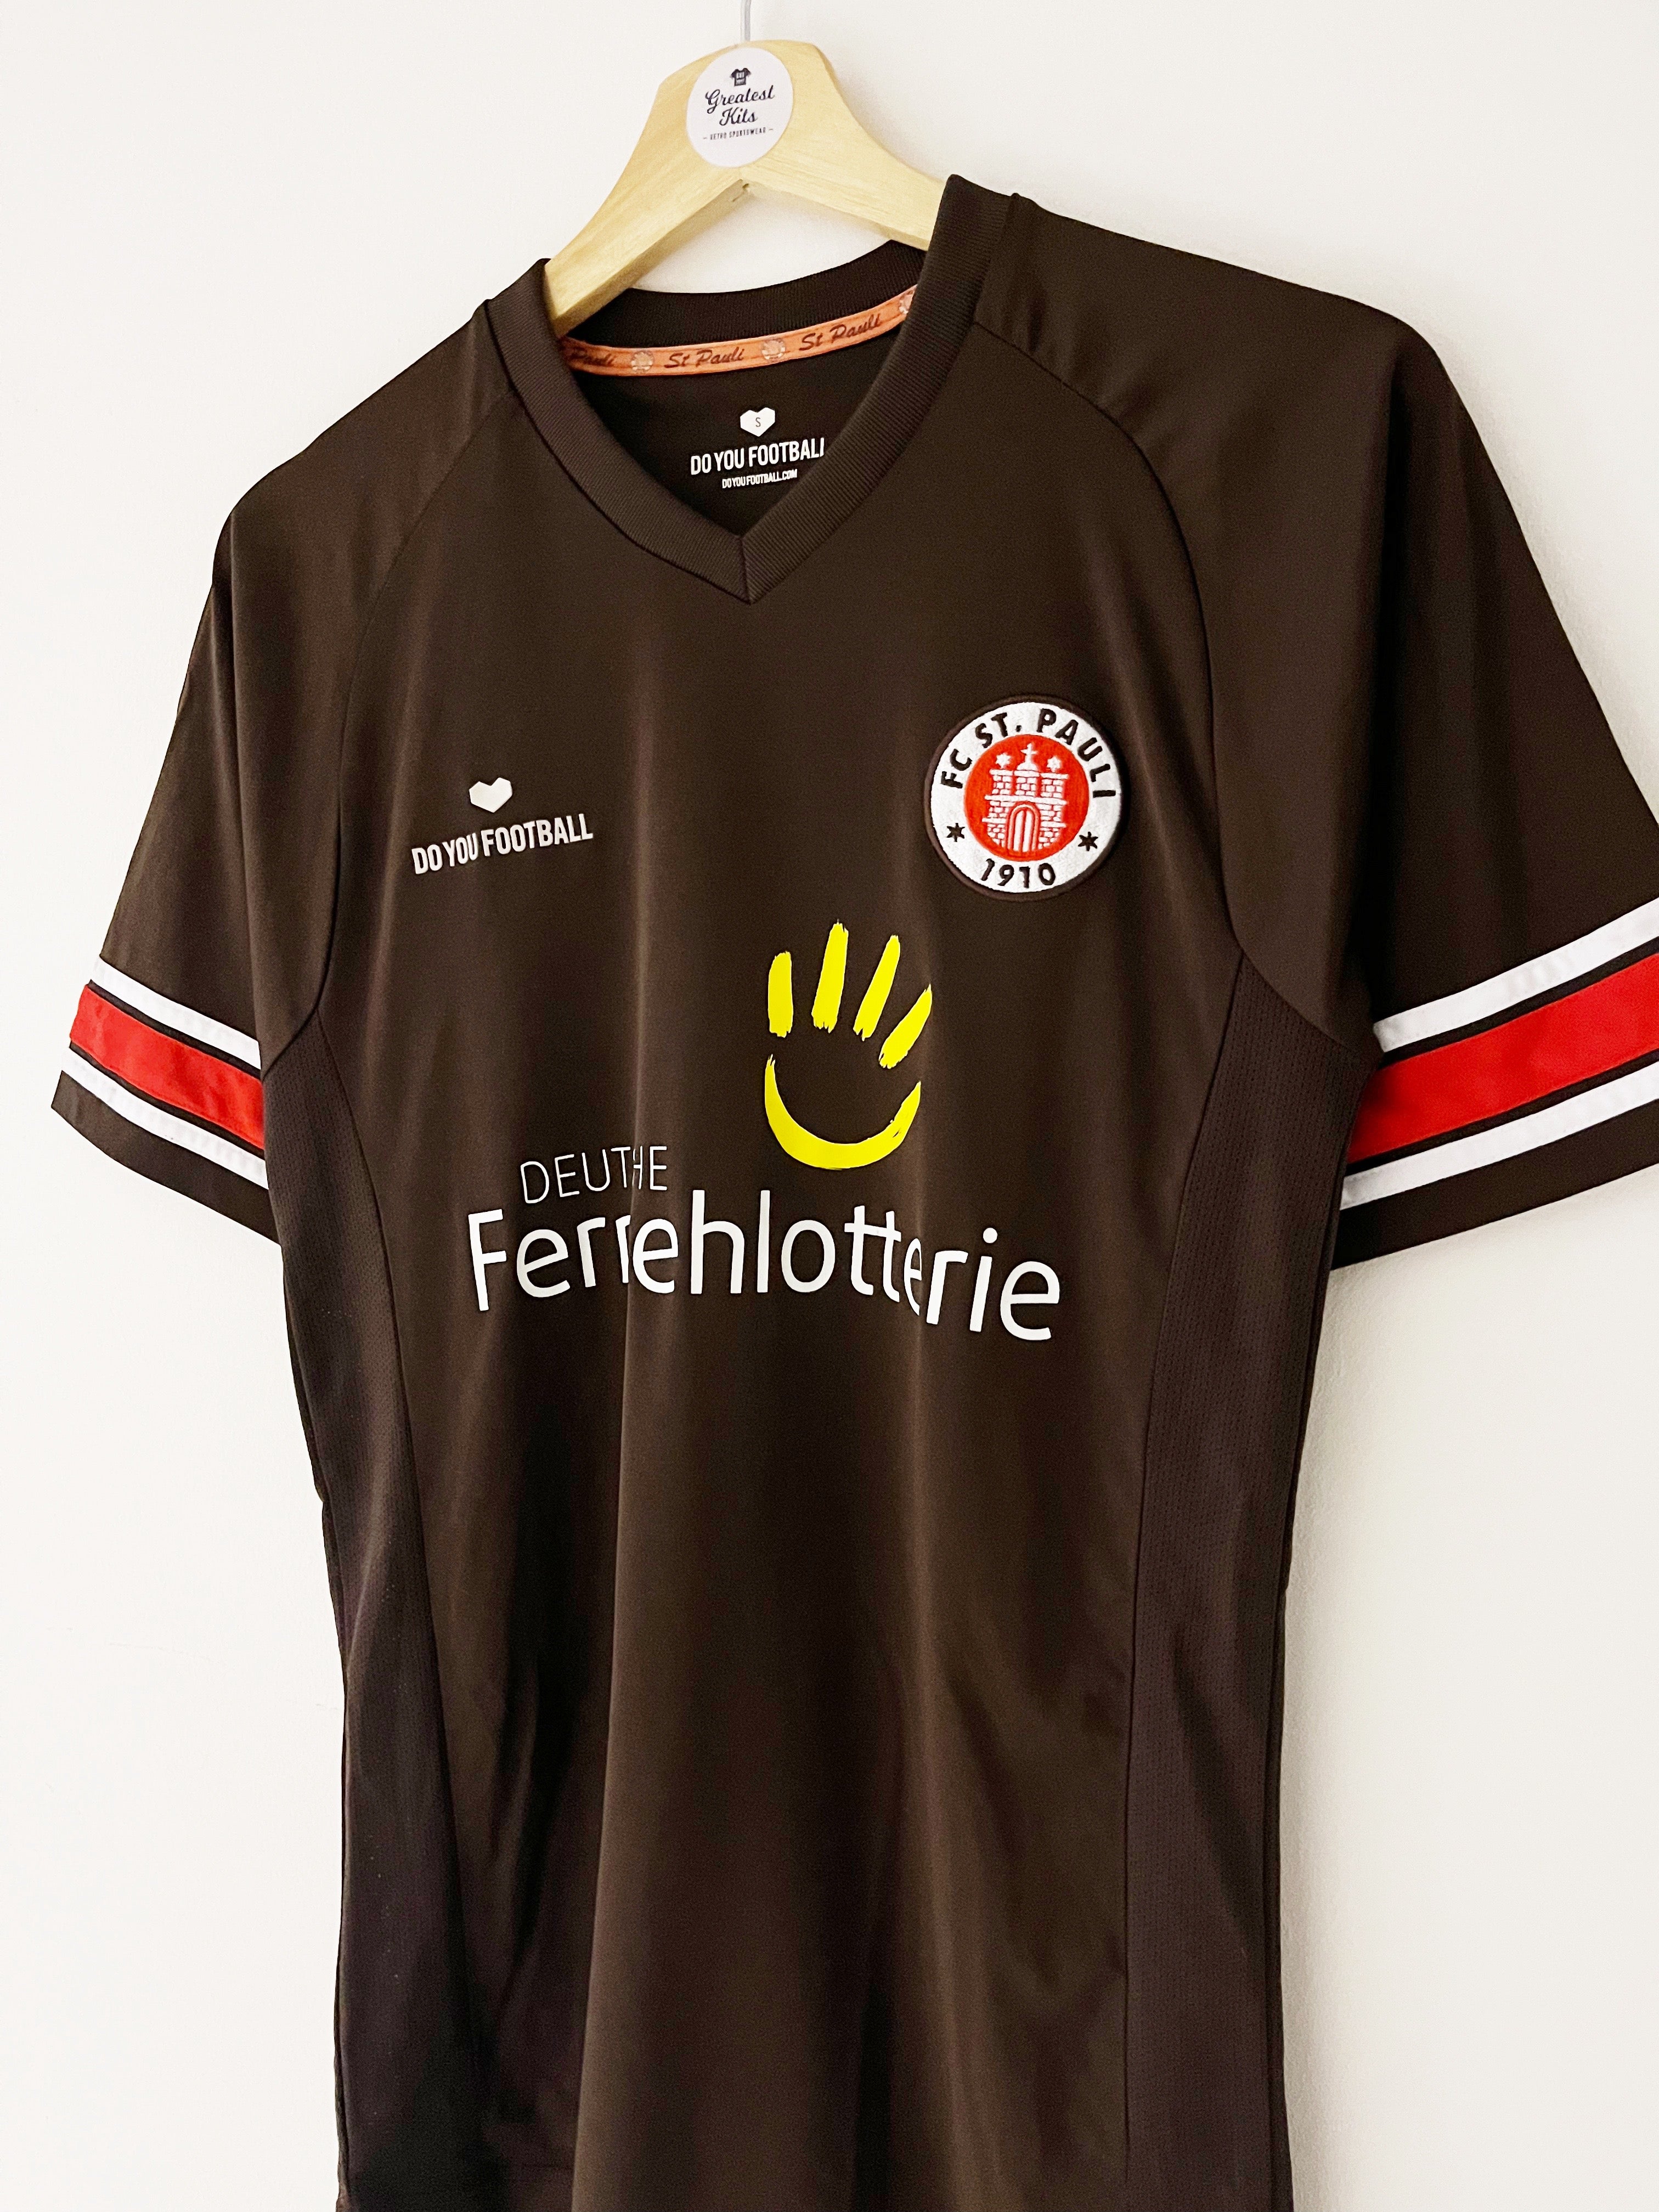 Fck nzs. O novo slogan das camisolas do Sankt Pauli, clube de